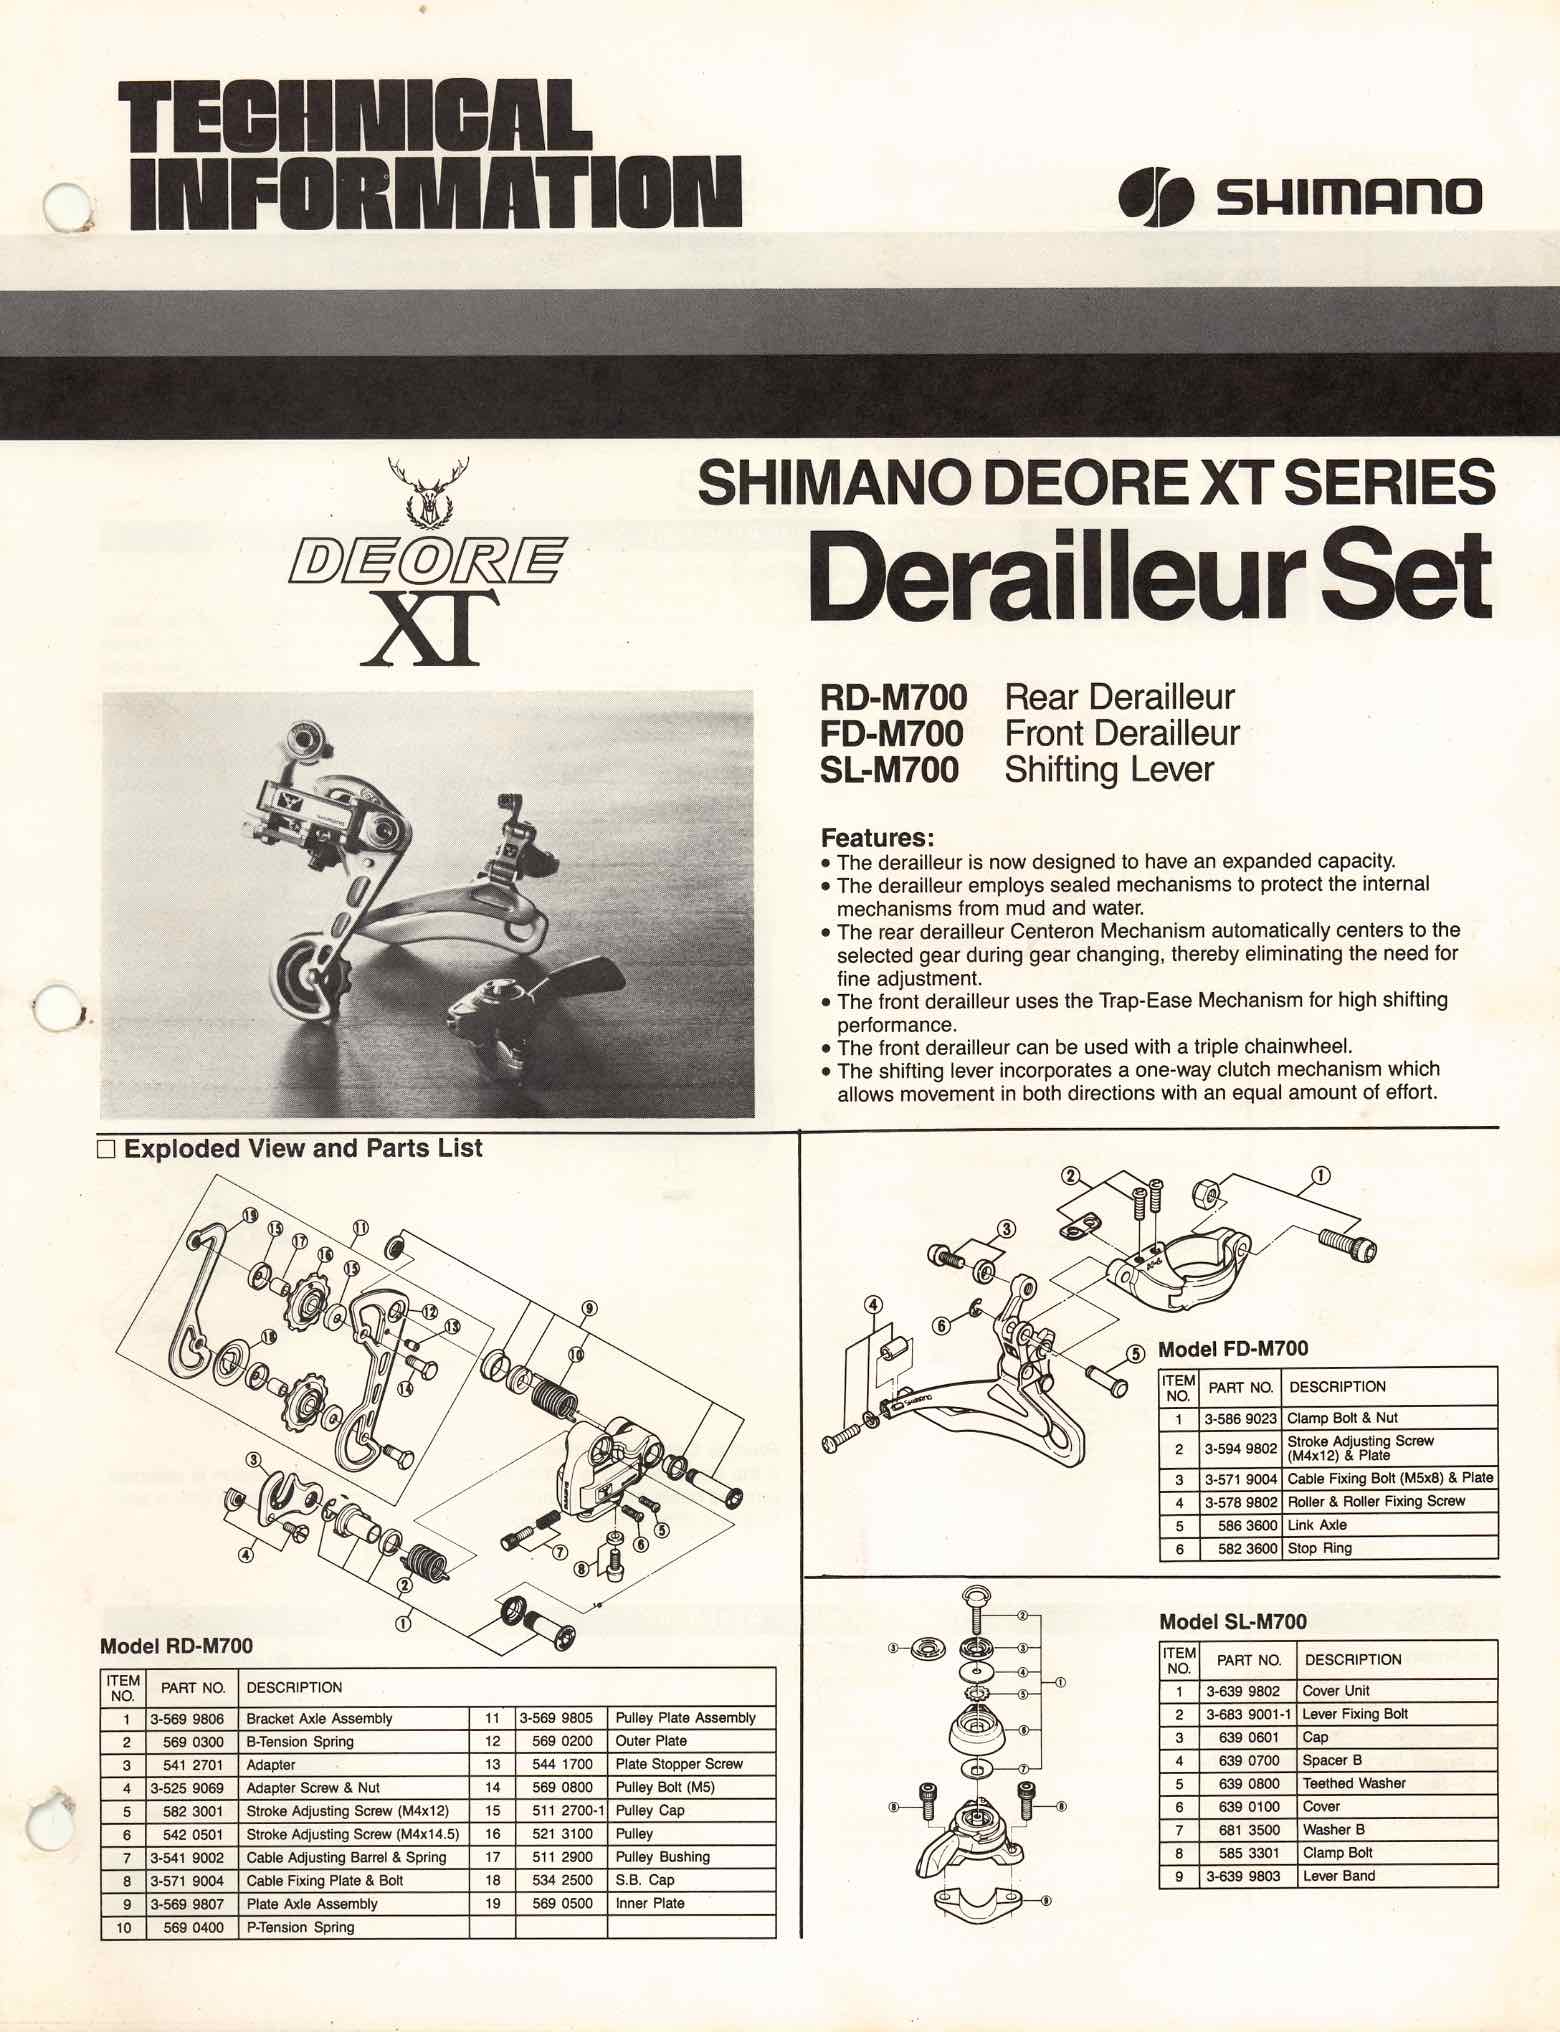 Shimano Technical Information - Deore XT 1983 scan 1 main image